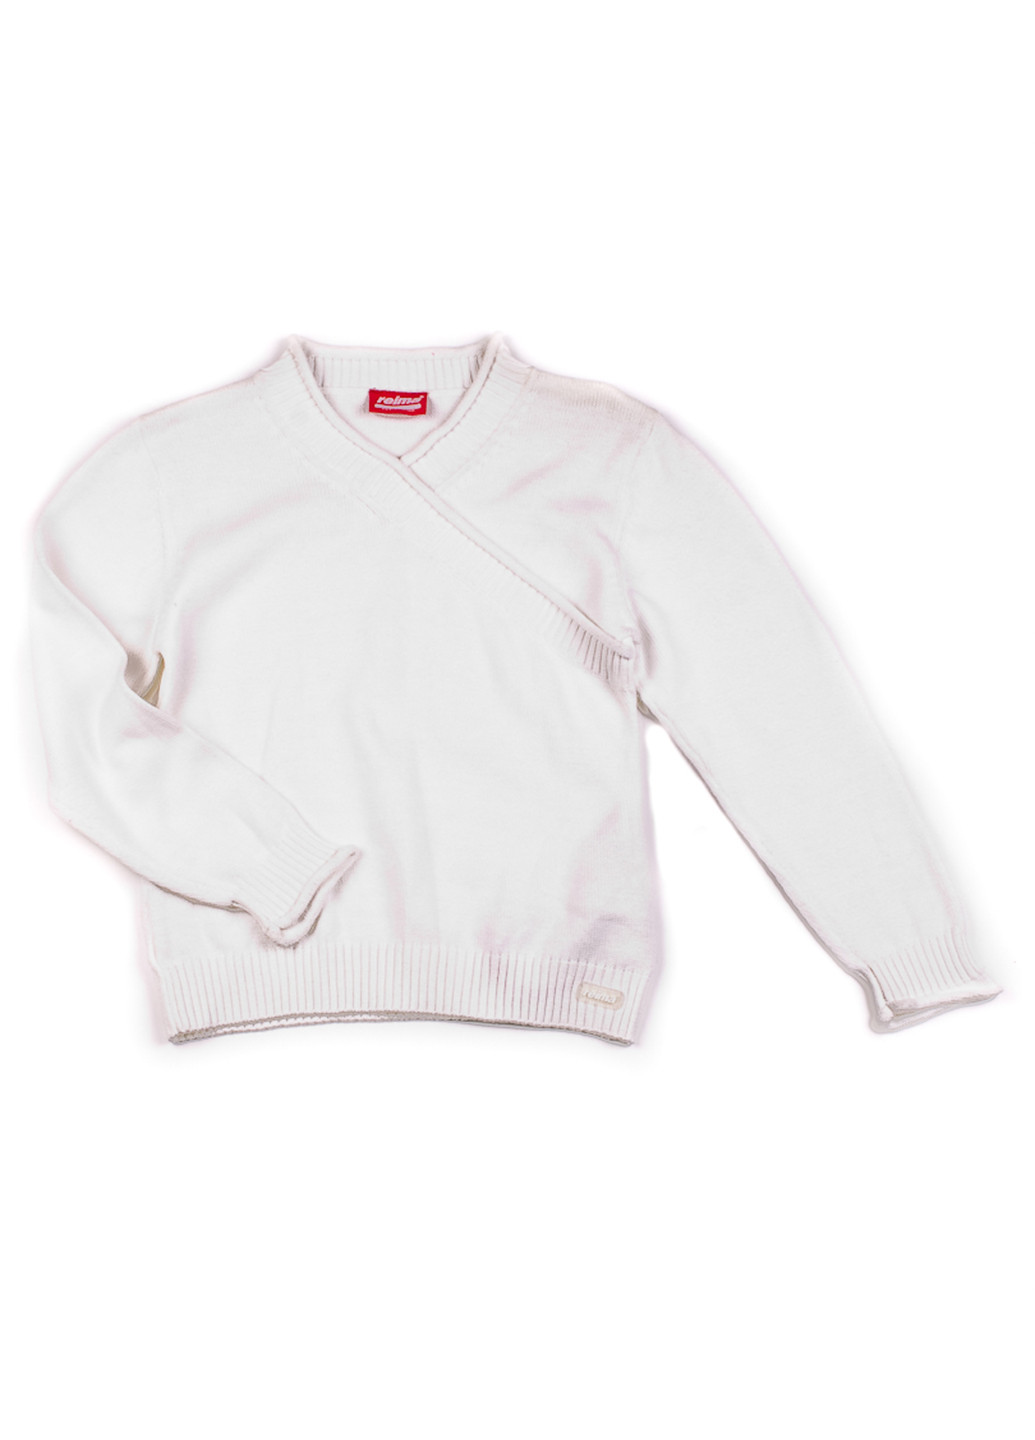 Белый демисезонный пуловер пуловер Reima